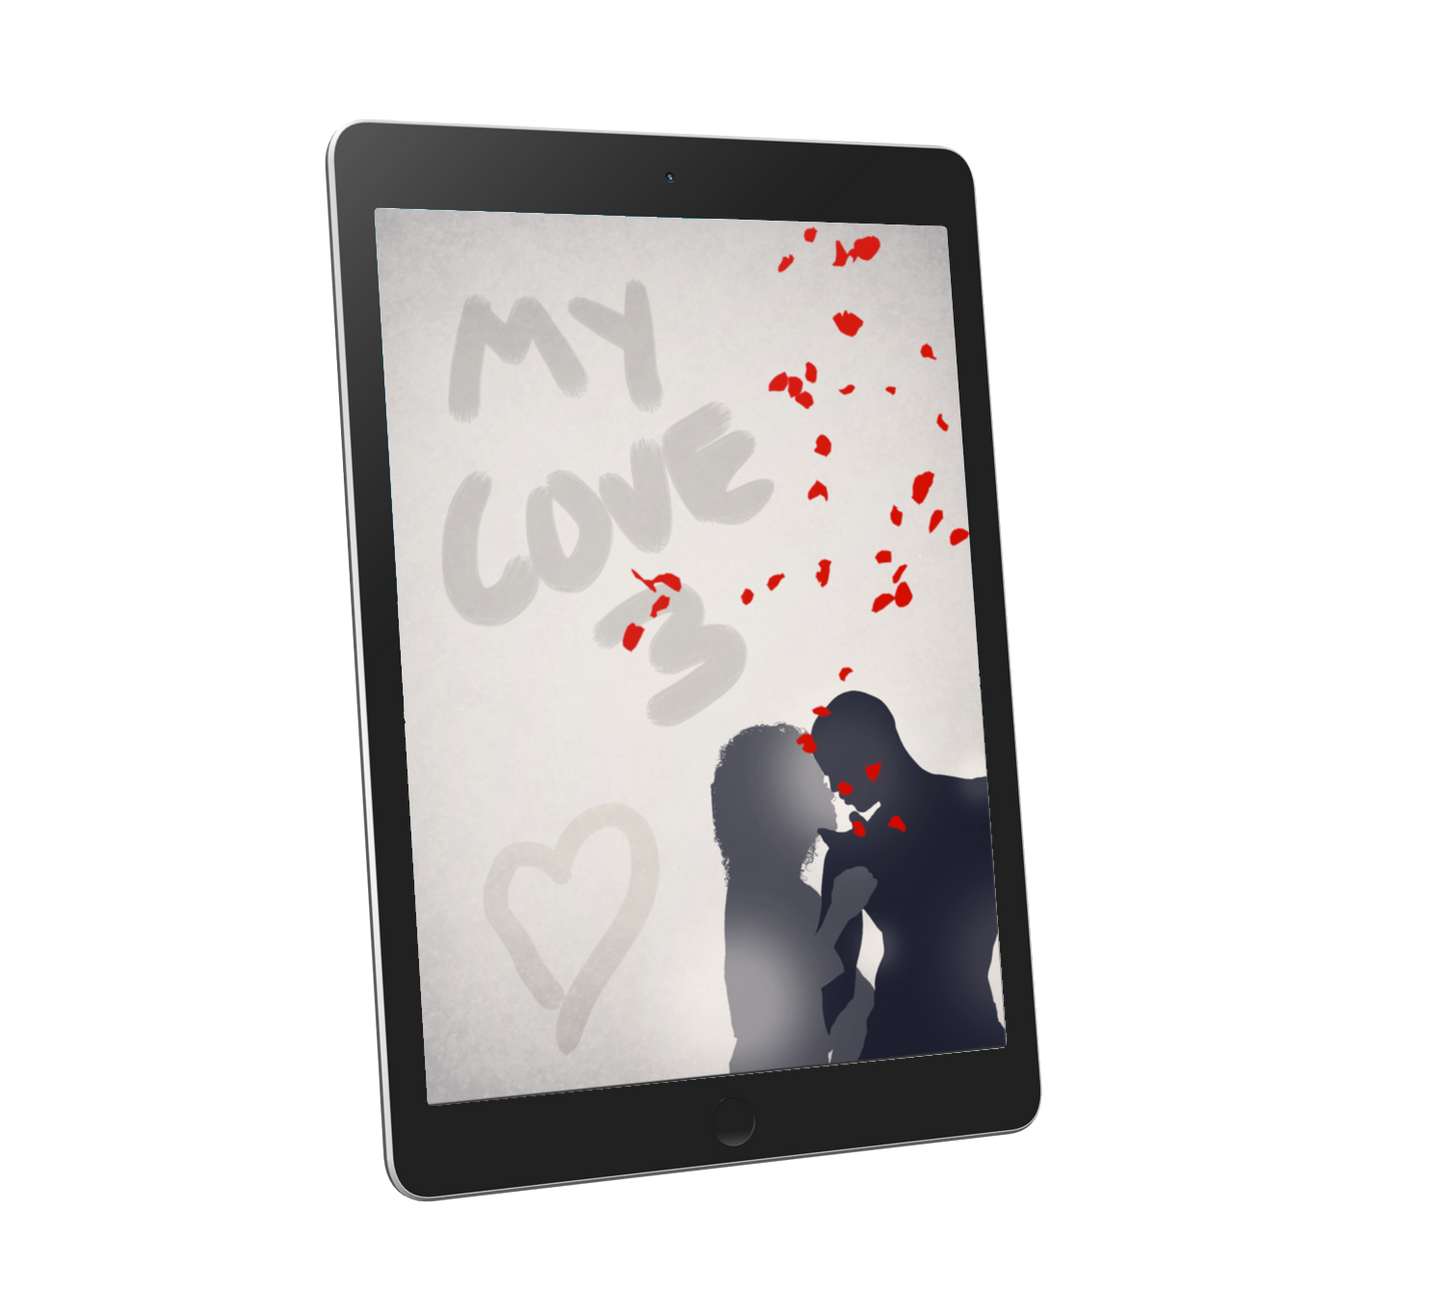 My Love 3 (Free ebook)